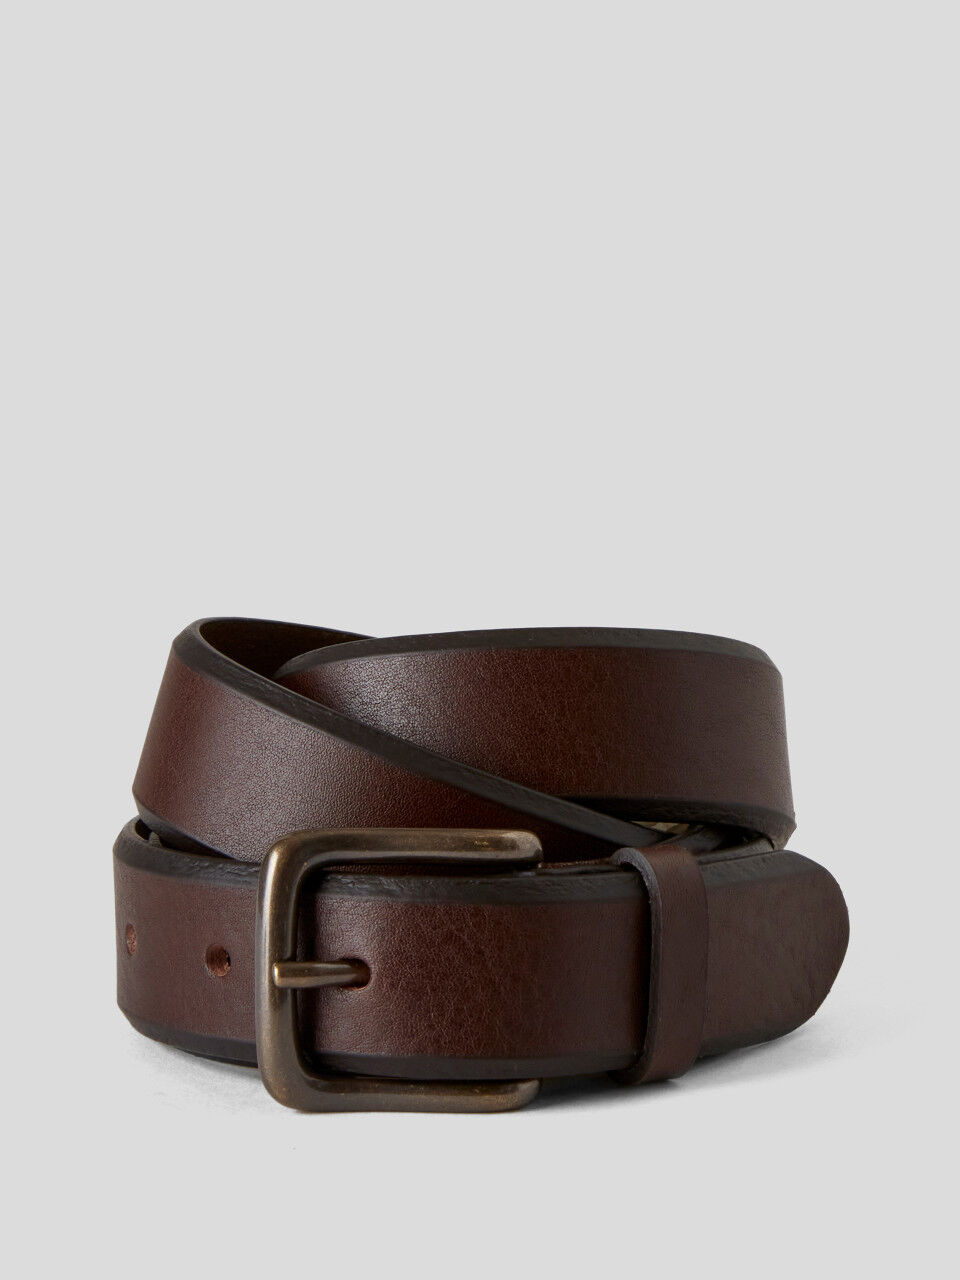 Men's Black Brown Casual Dress Genuine Leather Belt w/ Buckle Size S M L XL New 